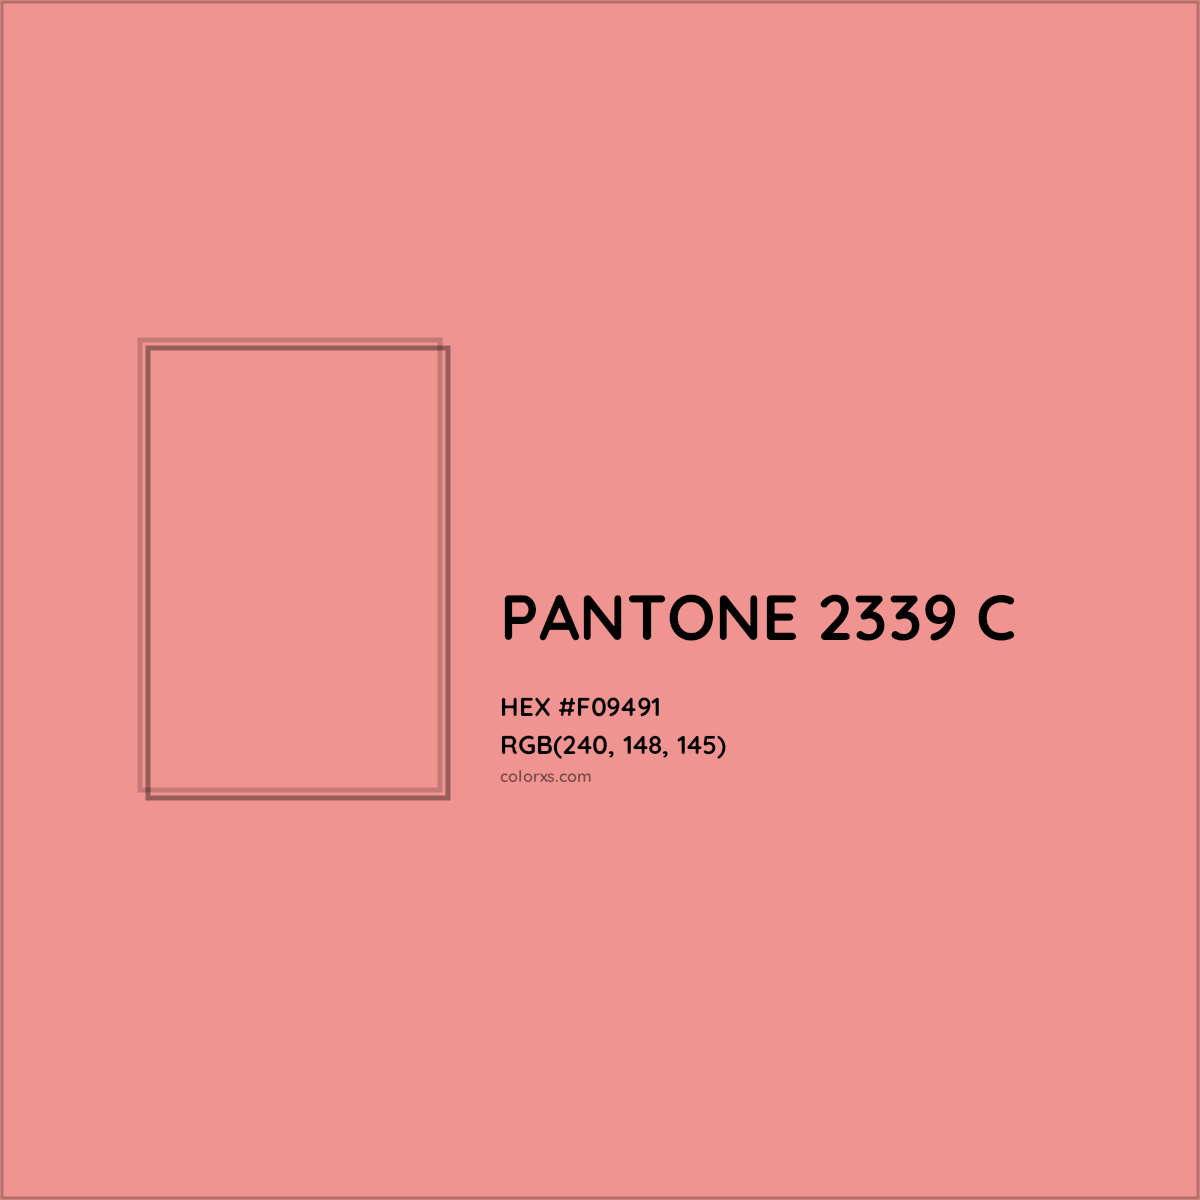 HEX #F09491 PANTONE 2339 C CMS Pantone PMS - Color Code